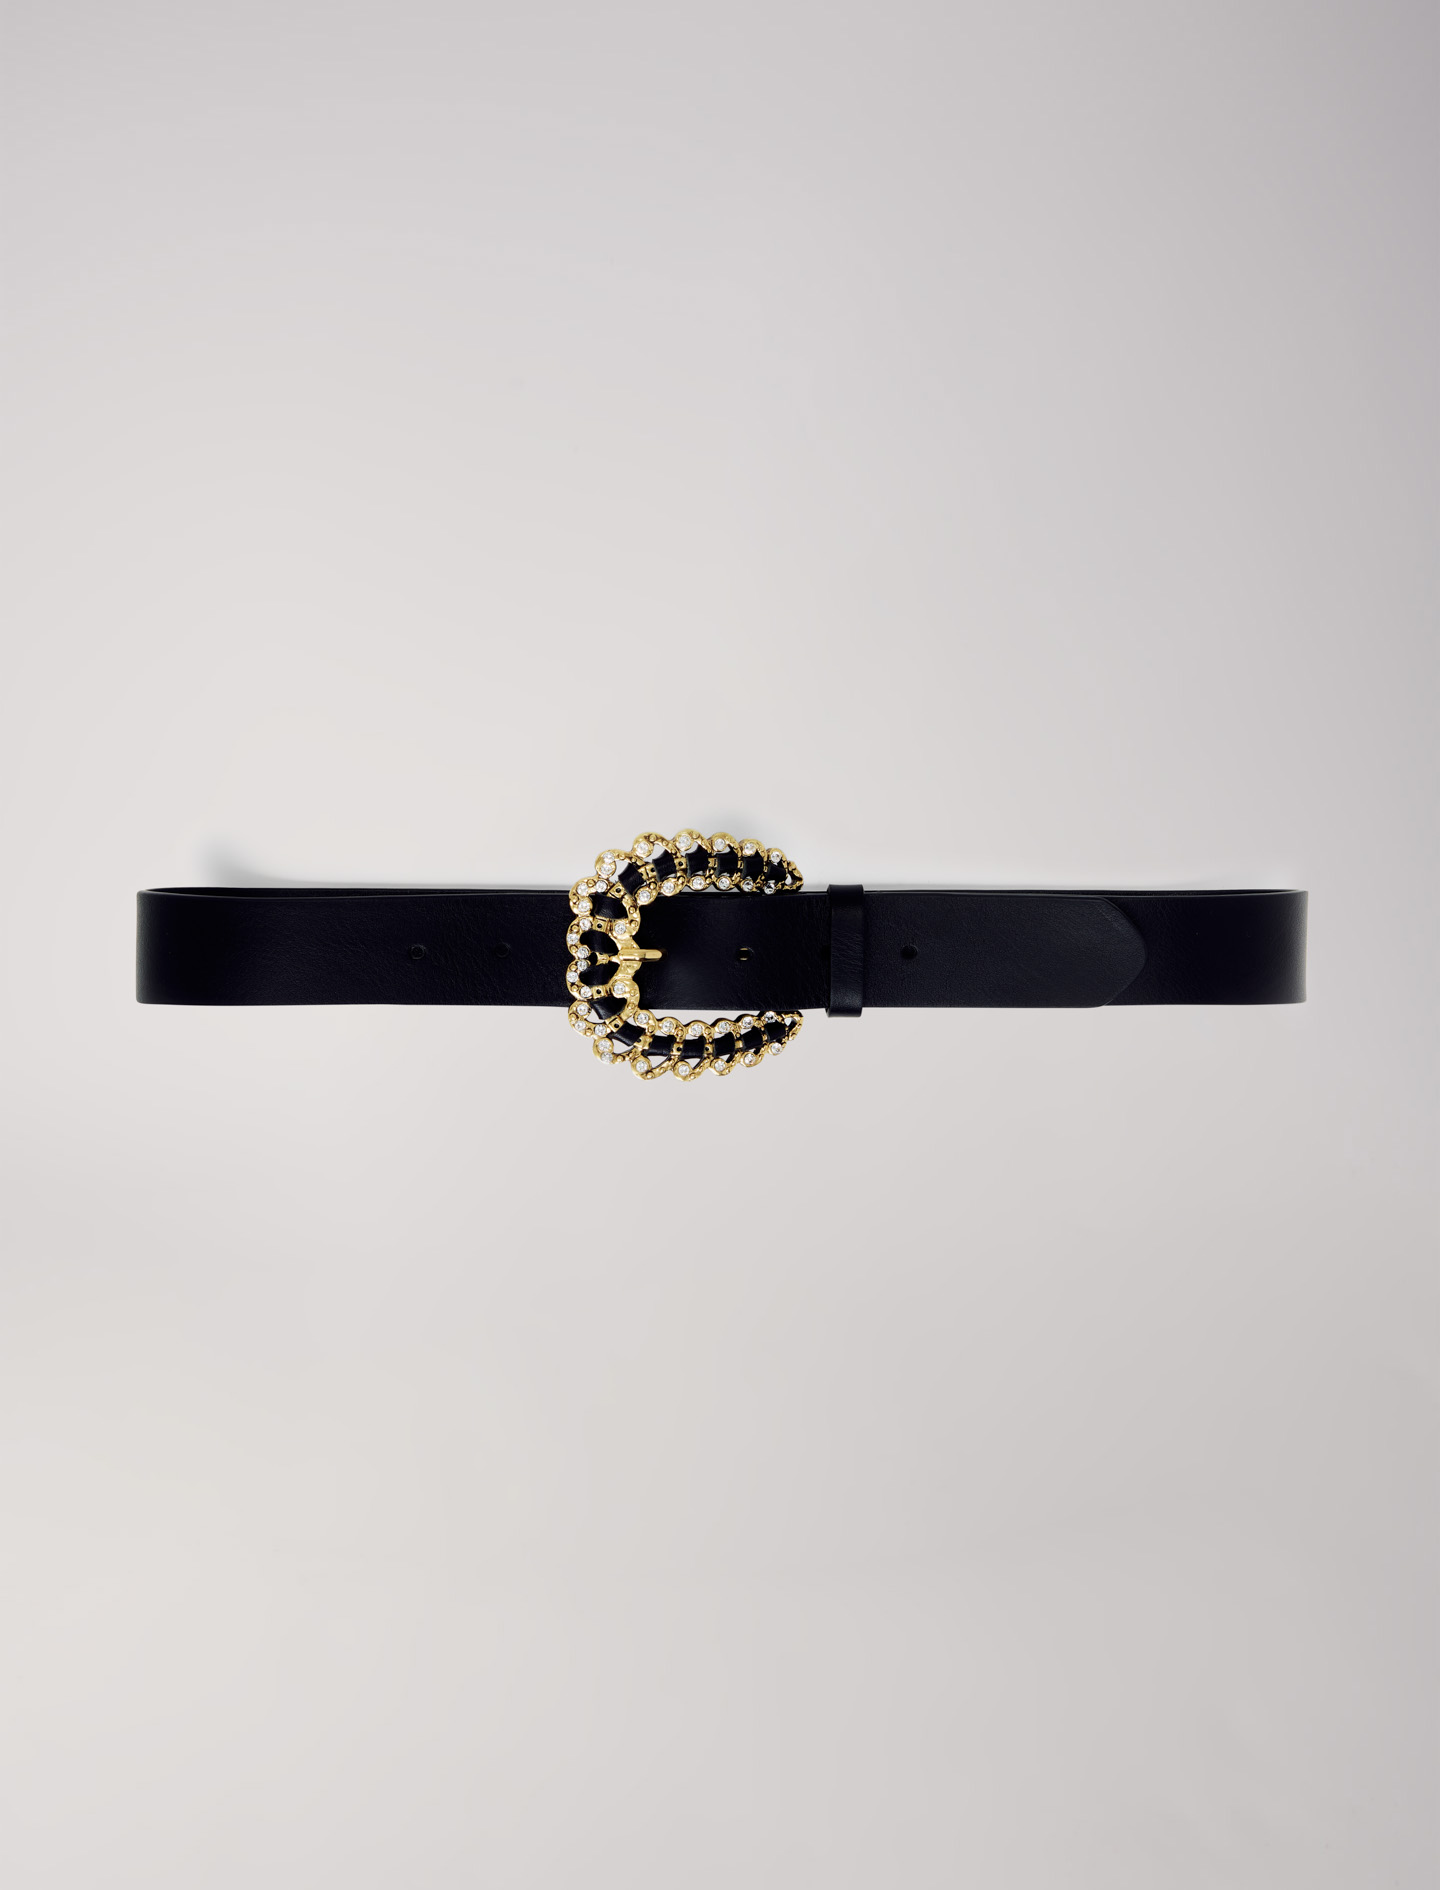 Mixte's polyester, Belt with diamanté buckle for Spring/Summer, size Mixte-Belts-US L / FR 3, in color Black / Black